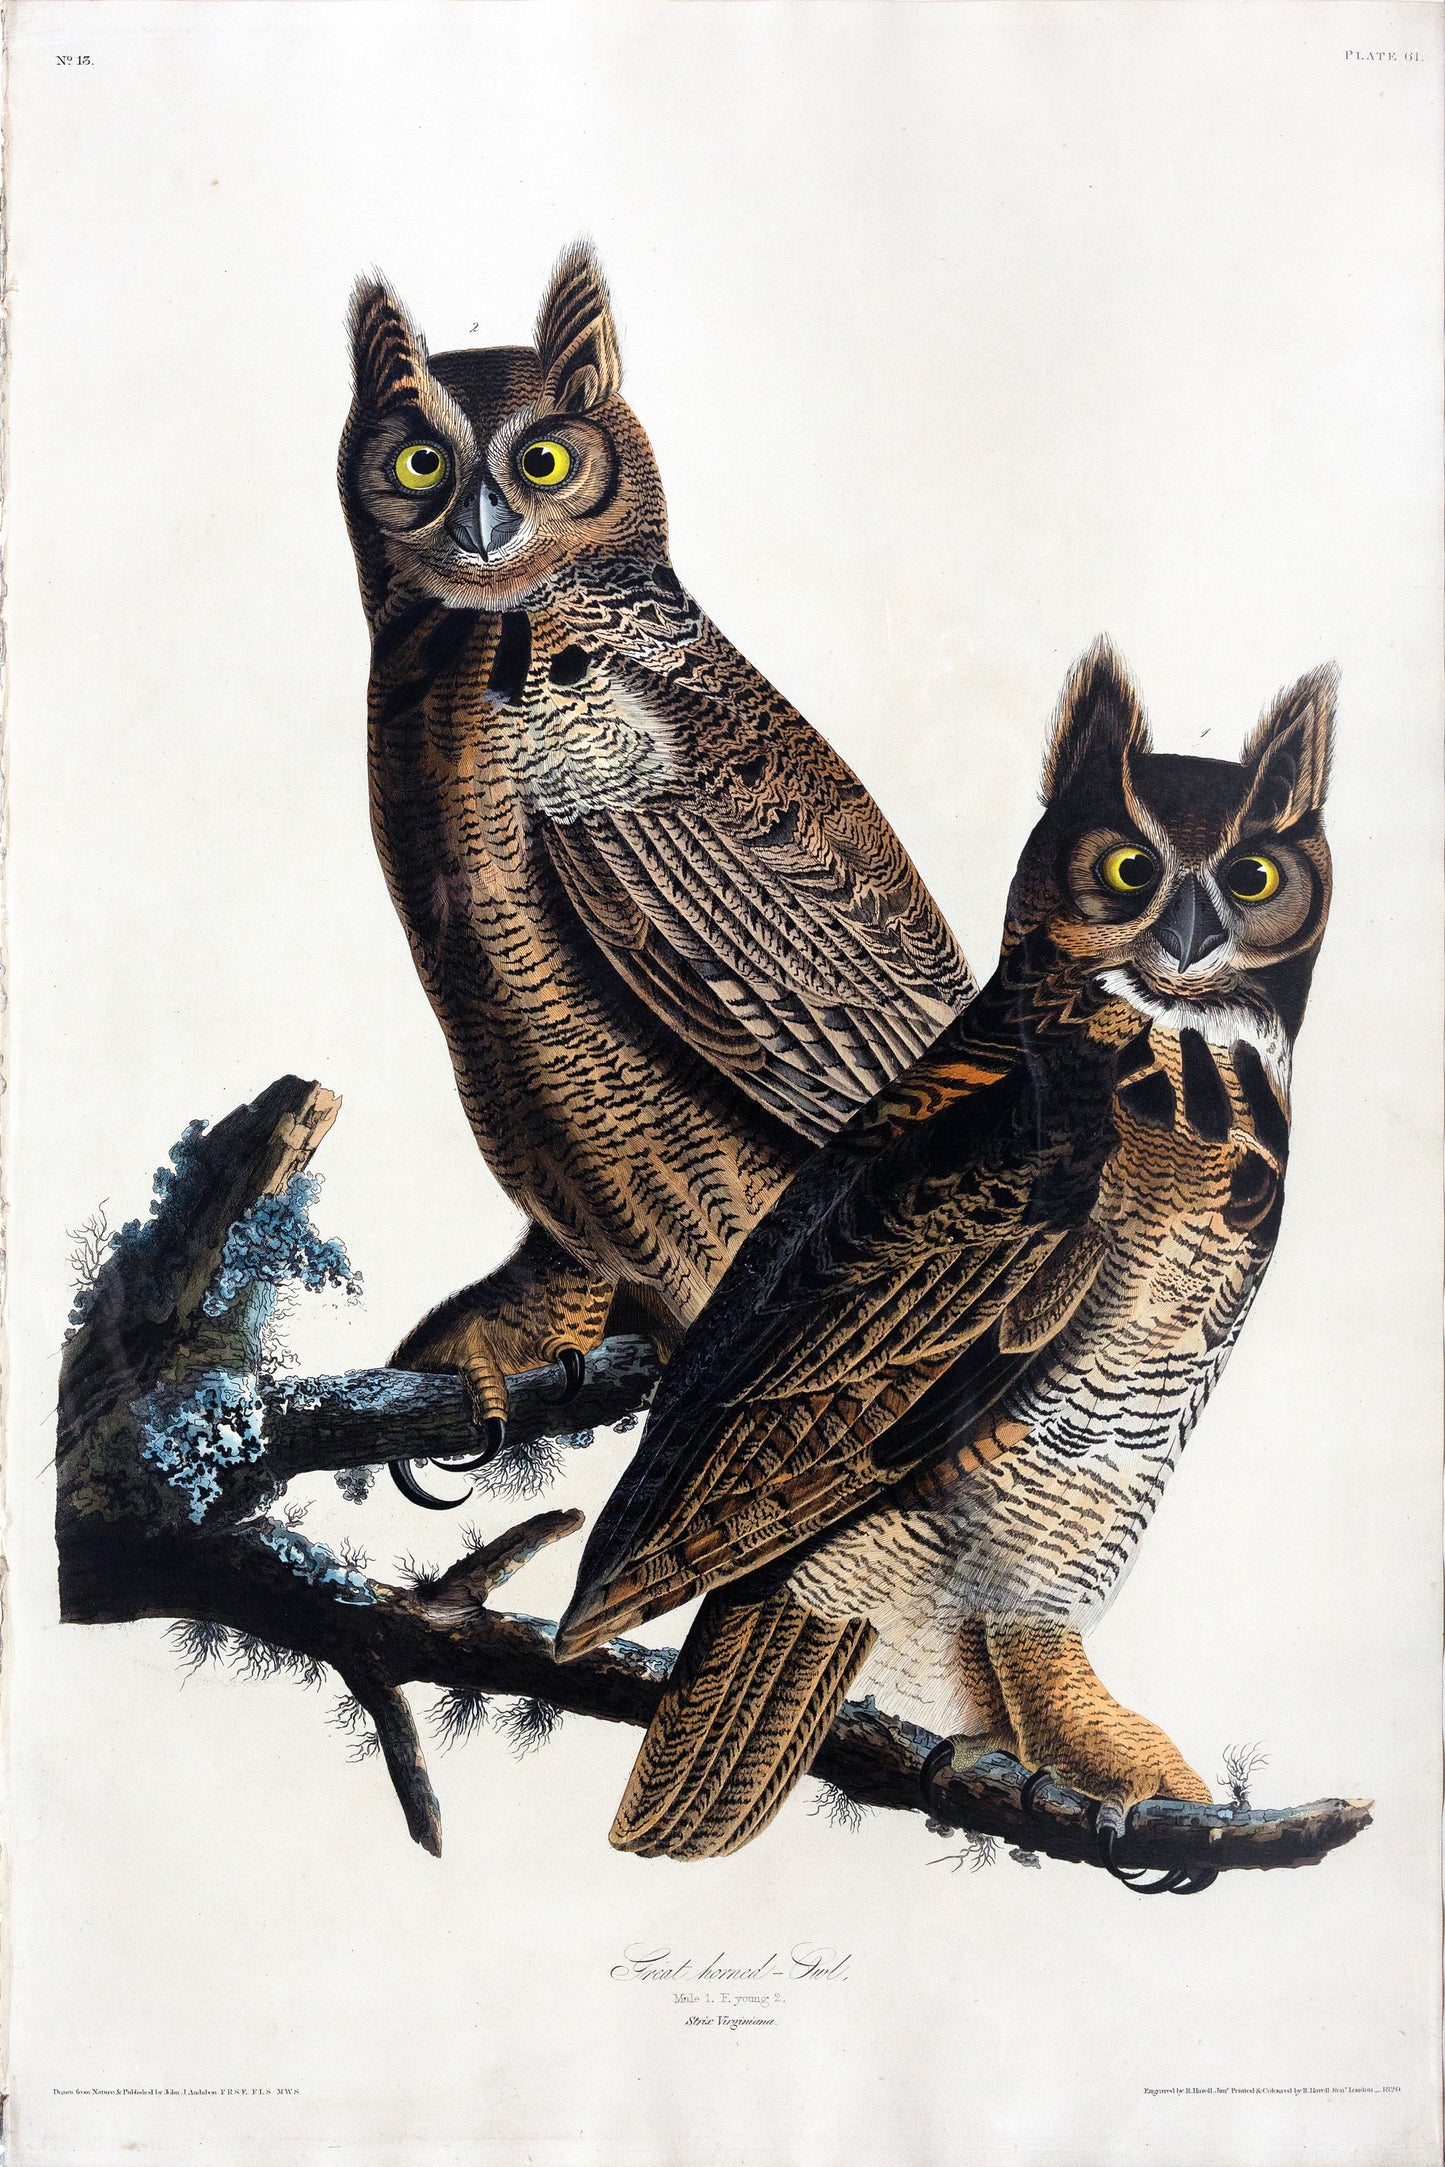 John James Audubon (1785-1851), Plate LXI Great Horned Owl